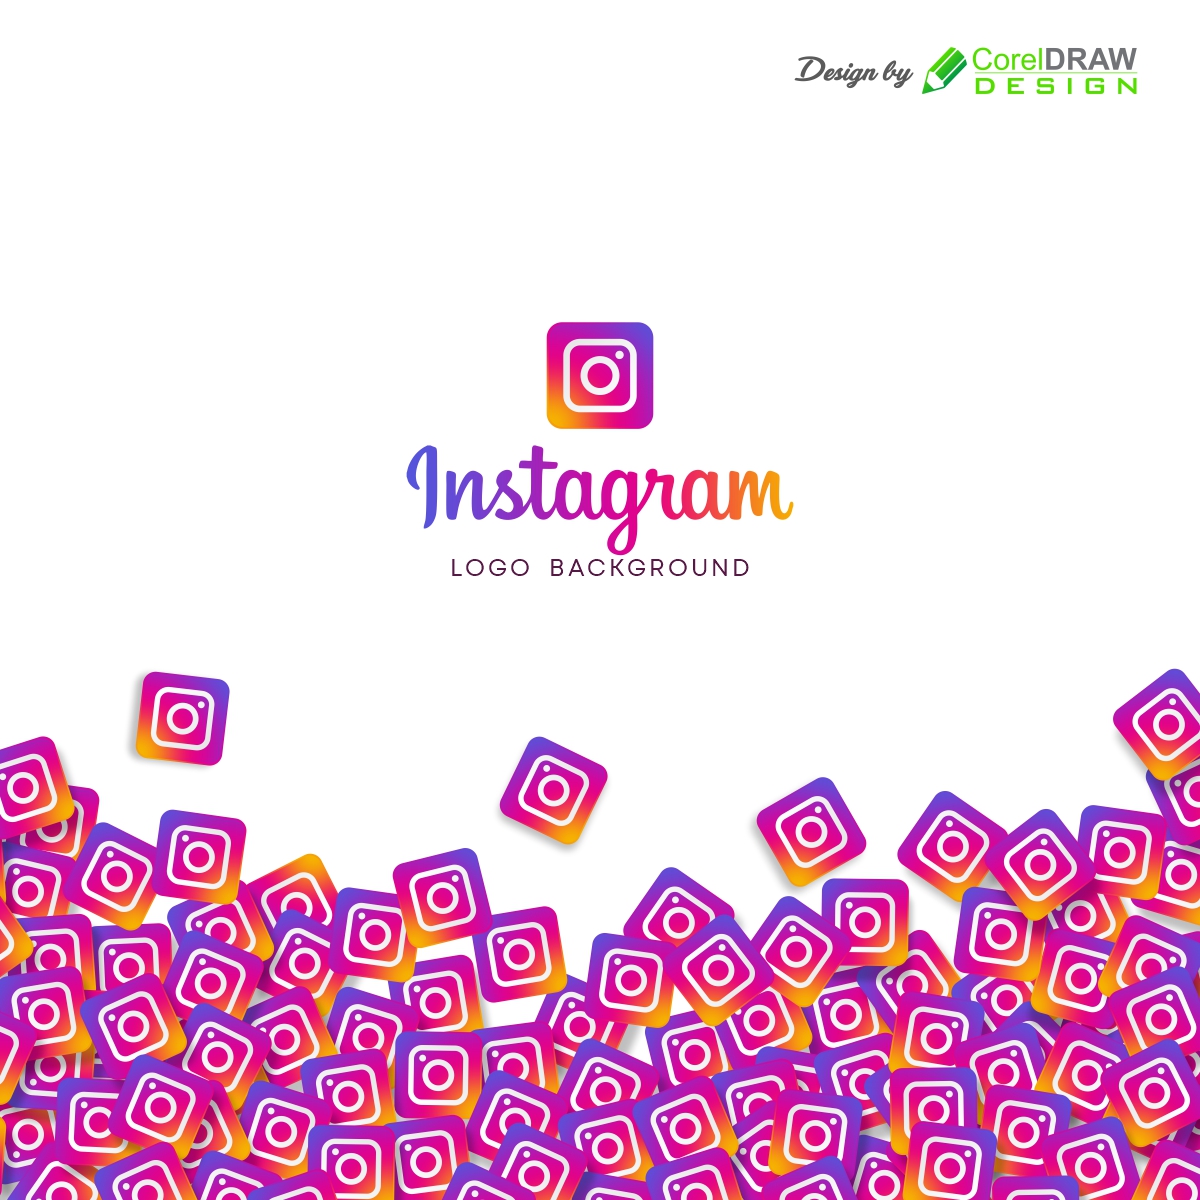 Instagram Logo Background, Free CDR